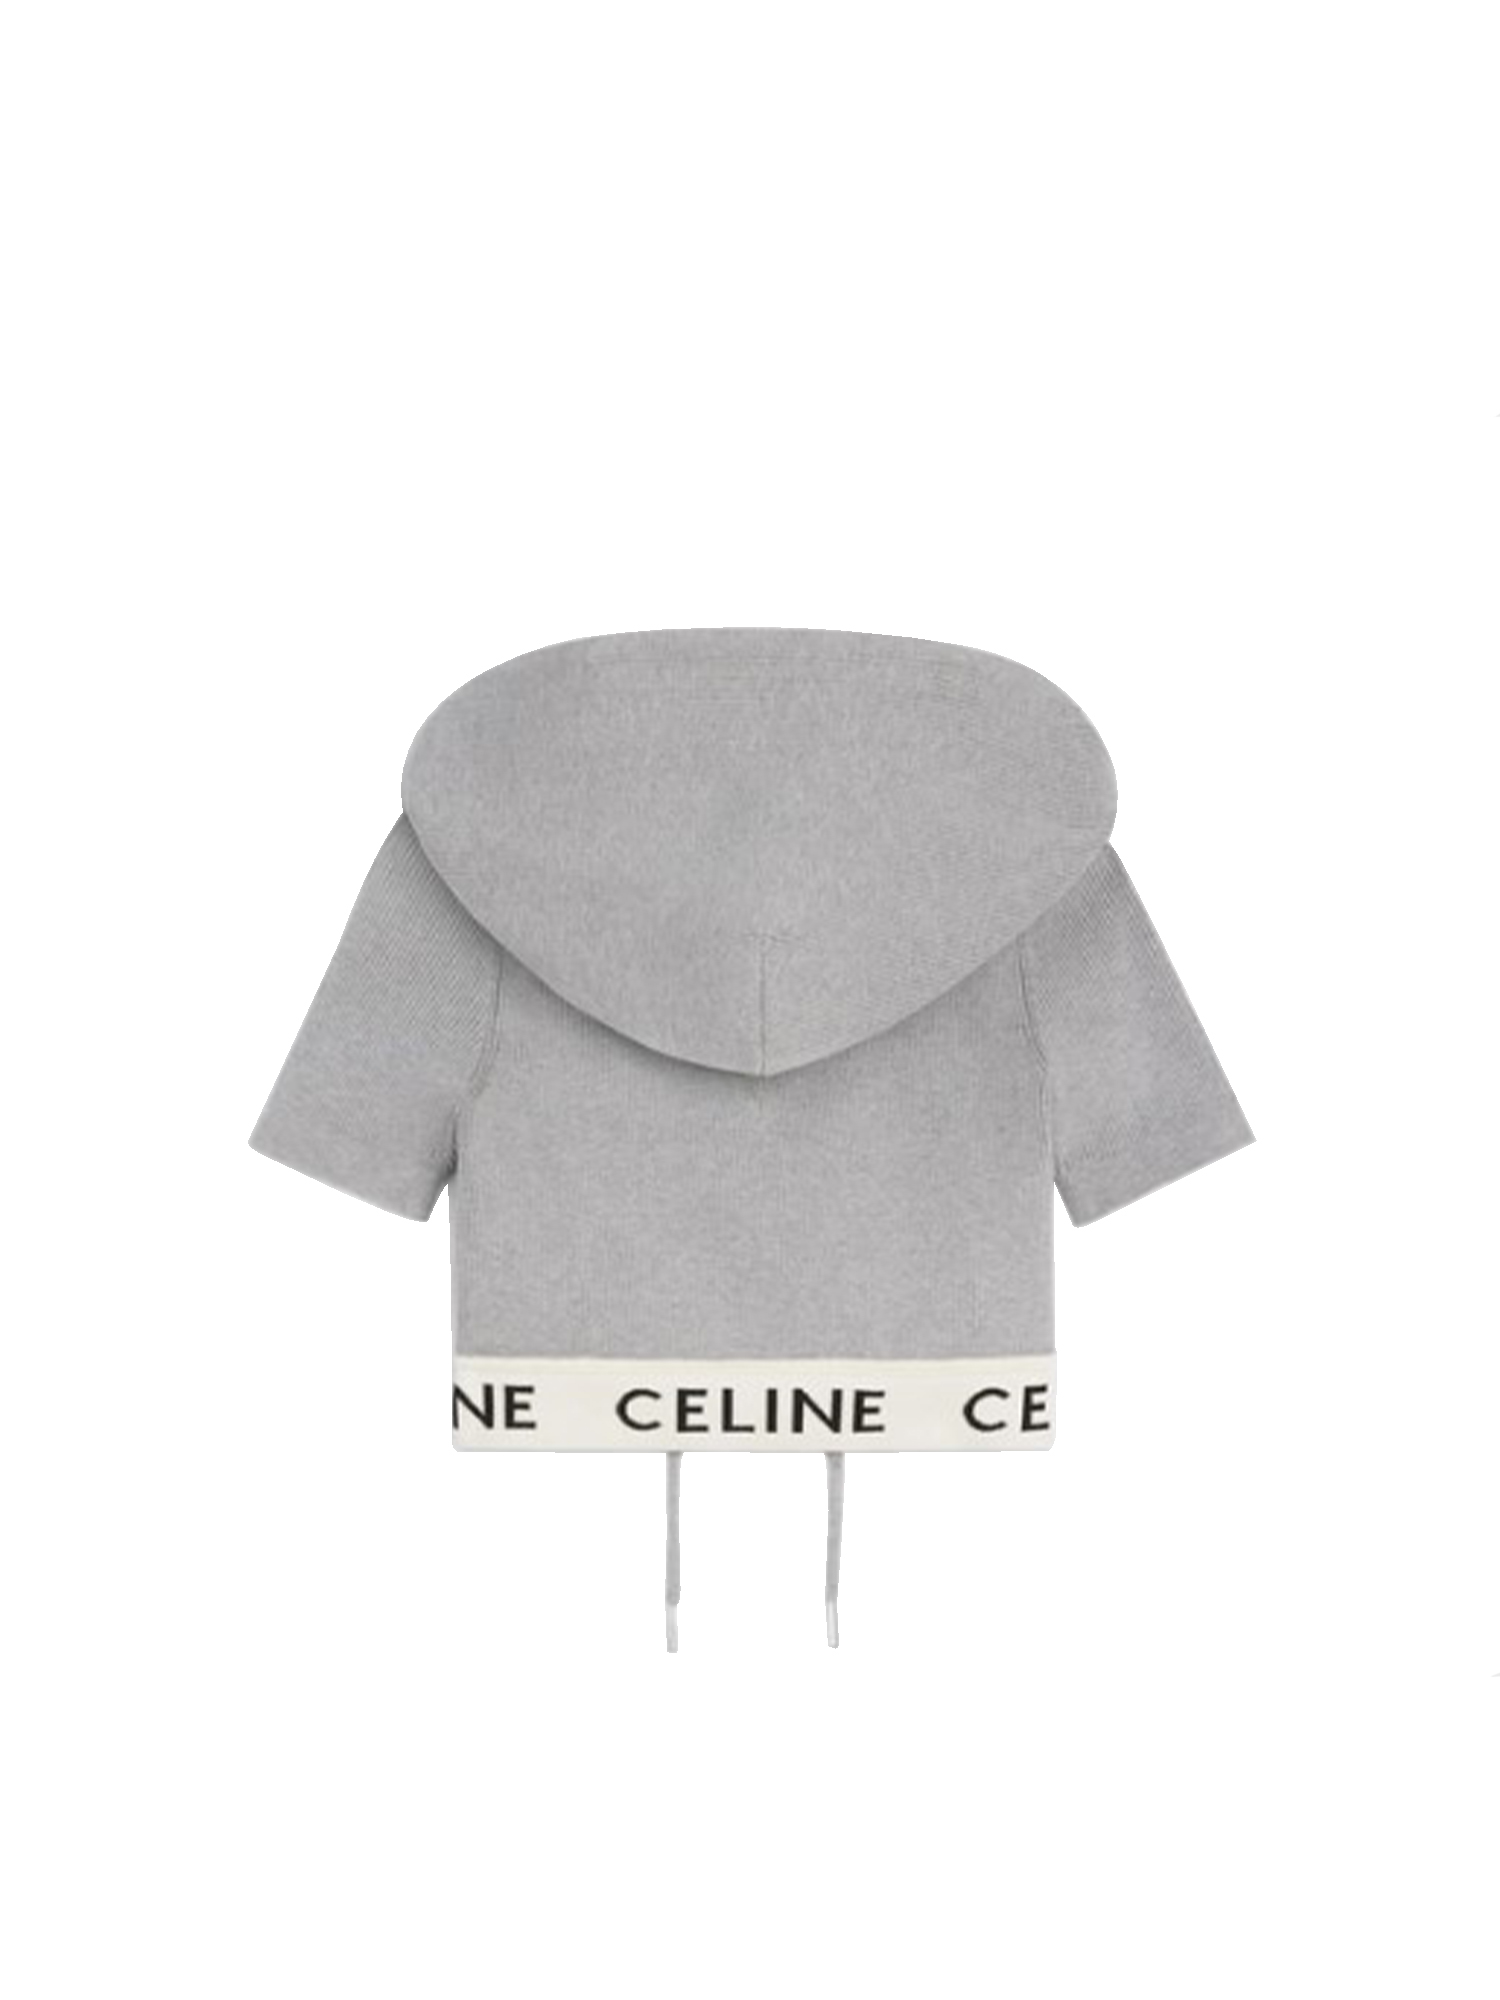 Celine Athletic Knit Sports Black/Cream - US